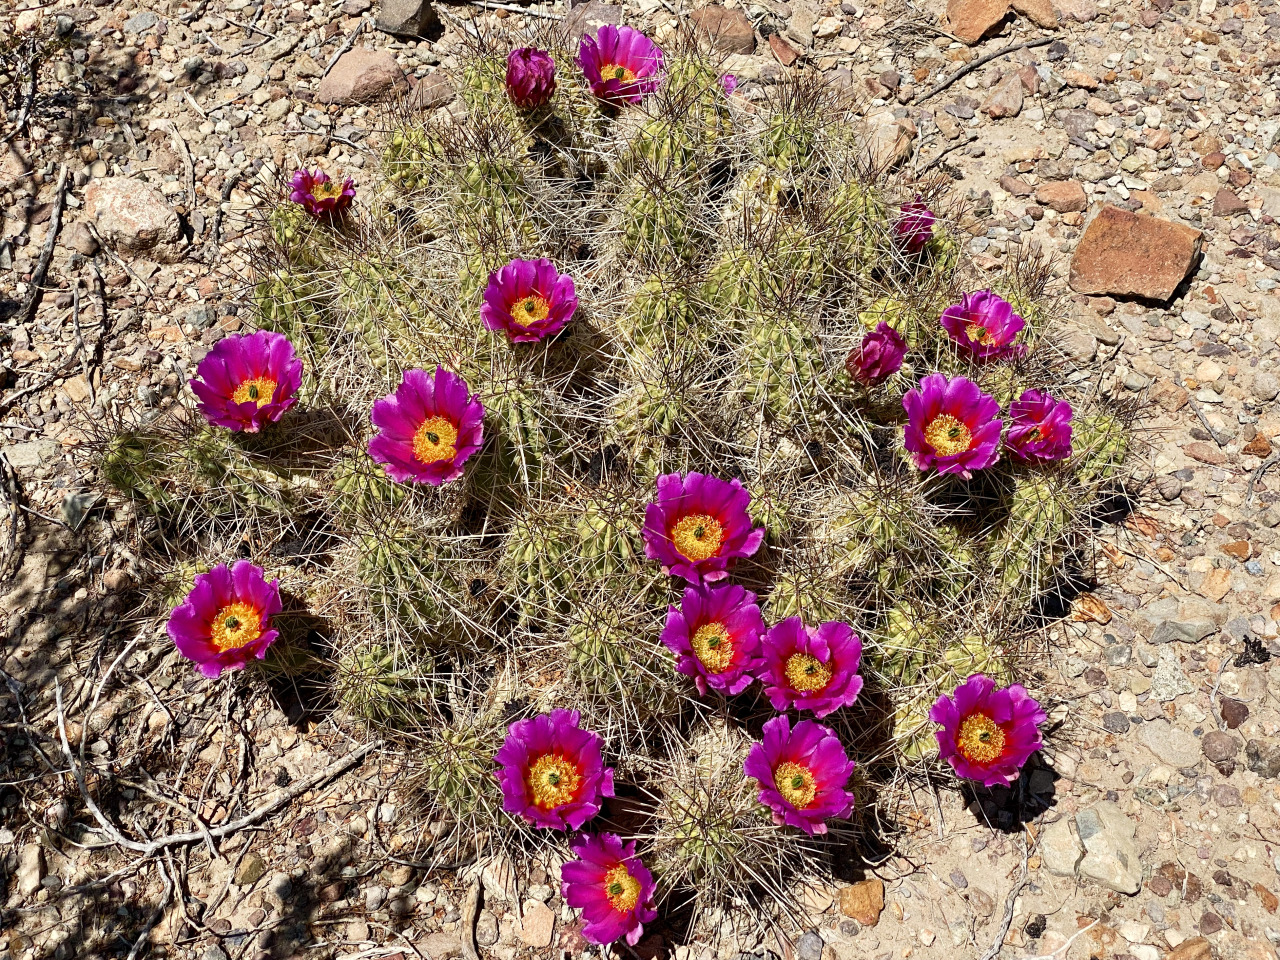 Strawberry Hedgehog Cactus (Echinocereus stramineus), Dugout Wells, Big Bend National Park, Texas. #cactus#flowers#flora#texas#chihuahuan desert #photographers on tumblr